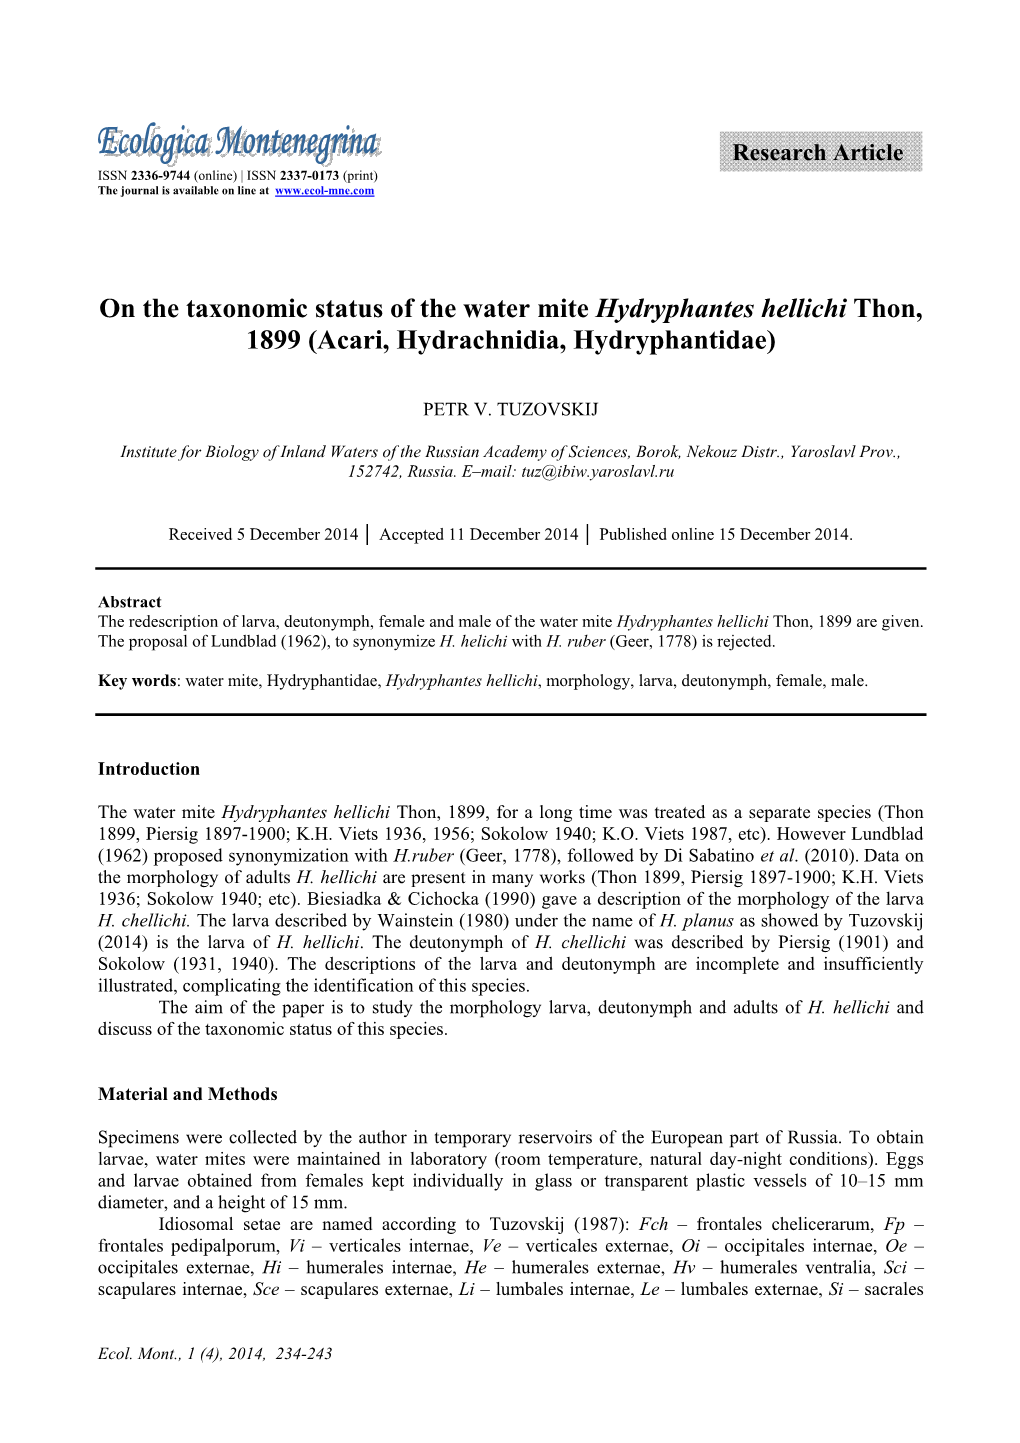 On the Taxonomic Status of the Water Mite Hydryphantes Hellichi Thon, 1899 (Acari, Hydrachnidia, Hydryphantidae)